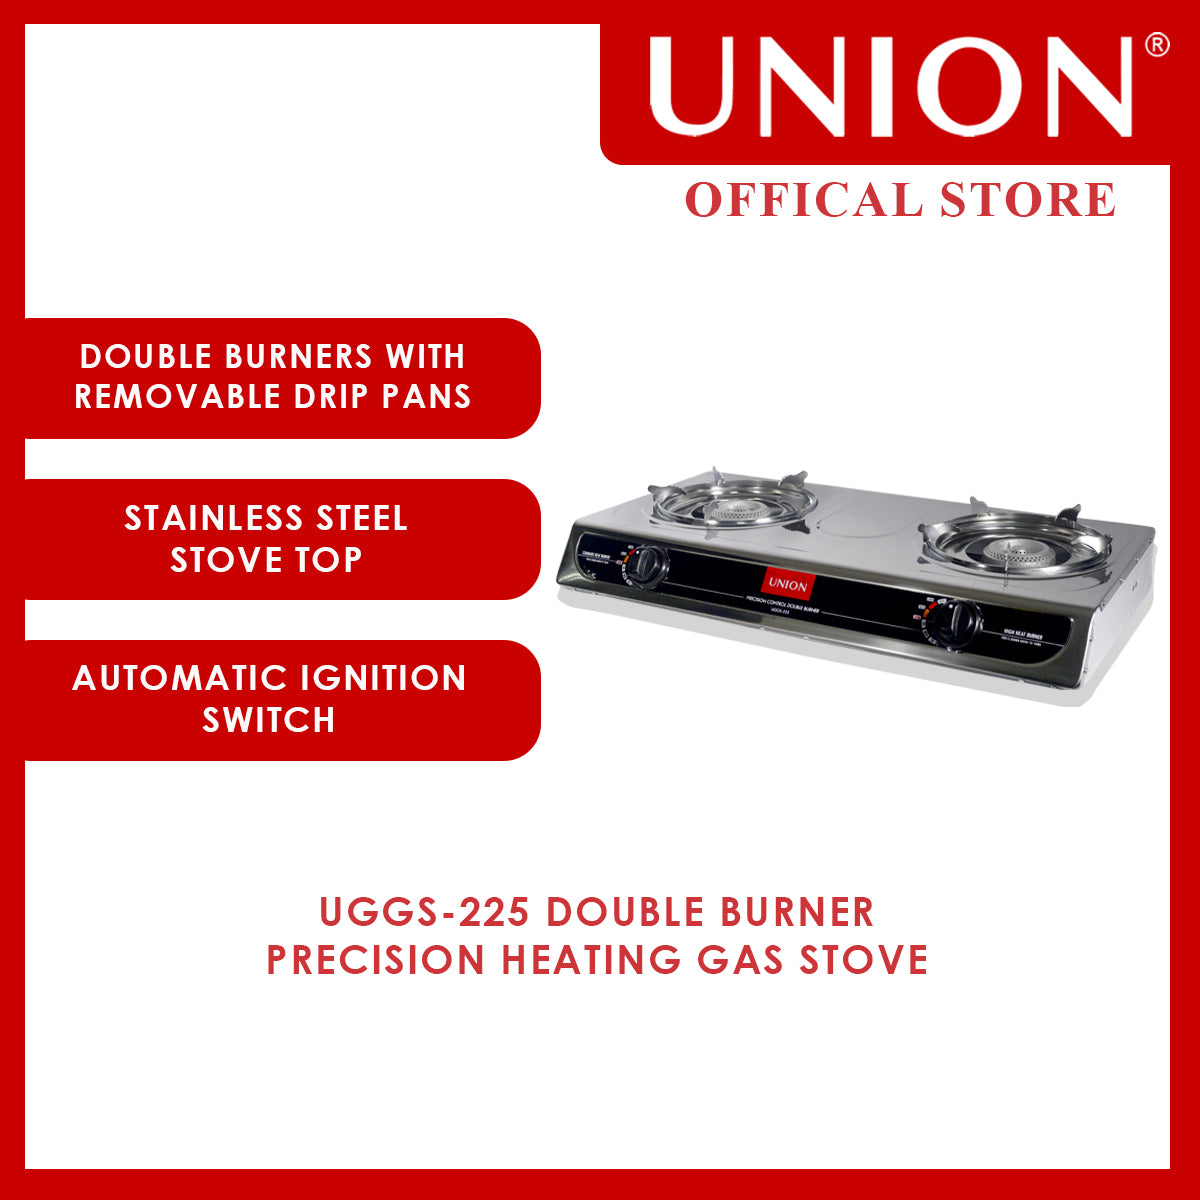 Union® Double Burner Precision Heating Gas Stove